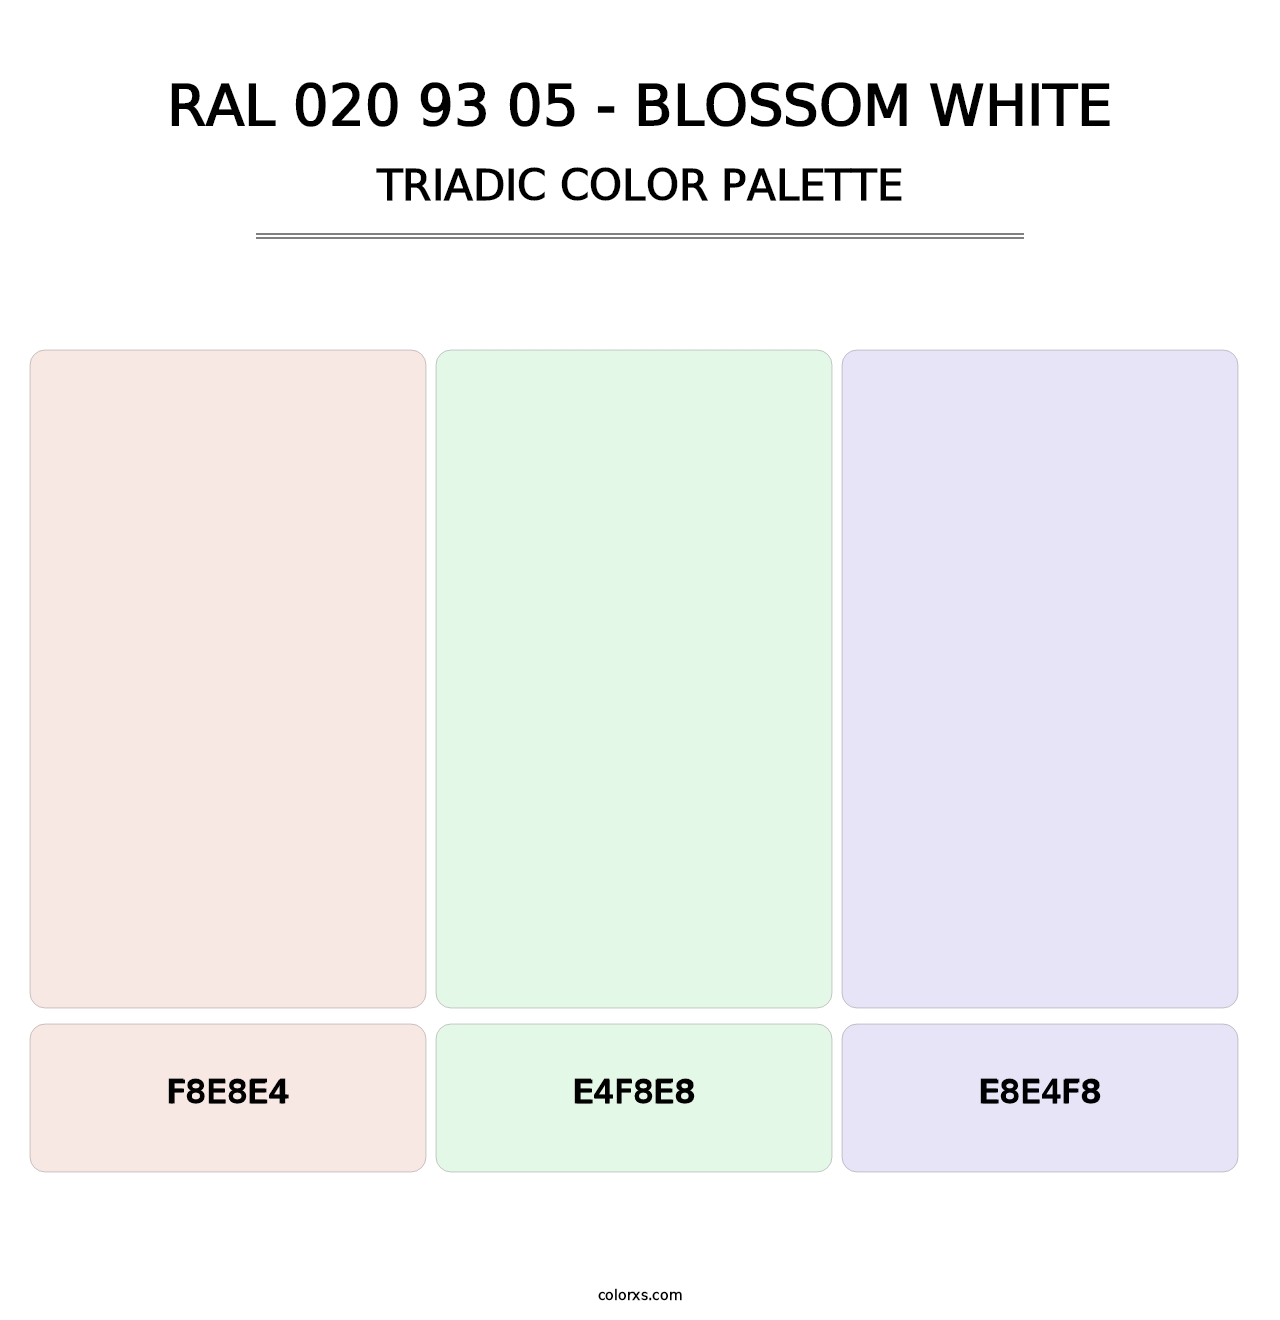 RAL 020 93 05 - Blossom White - Triadic Color Palette